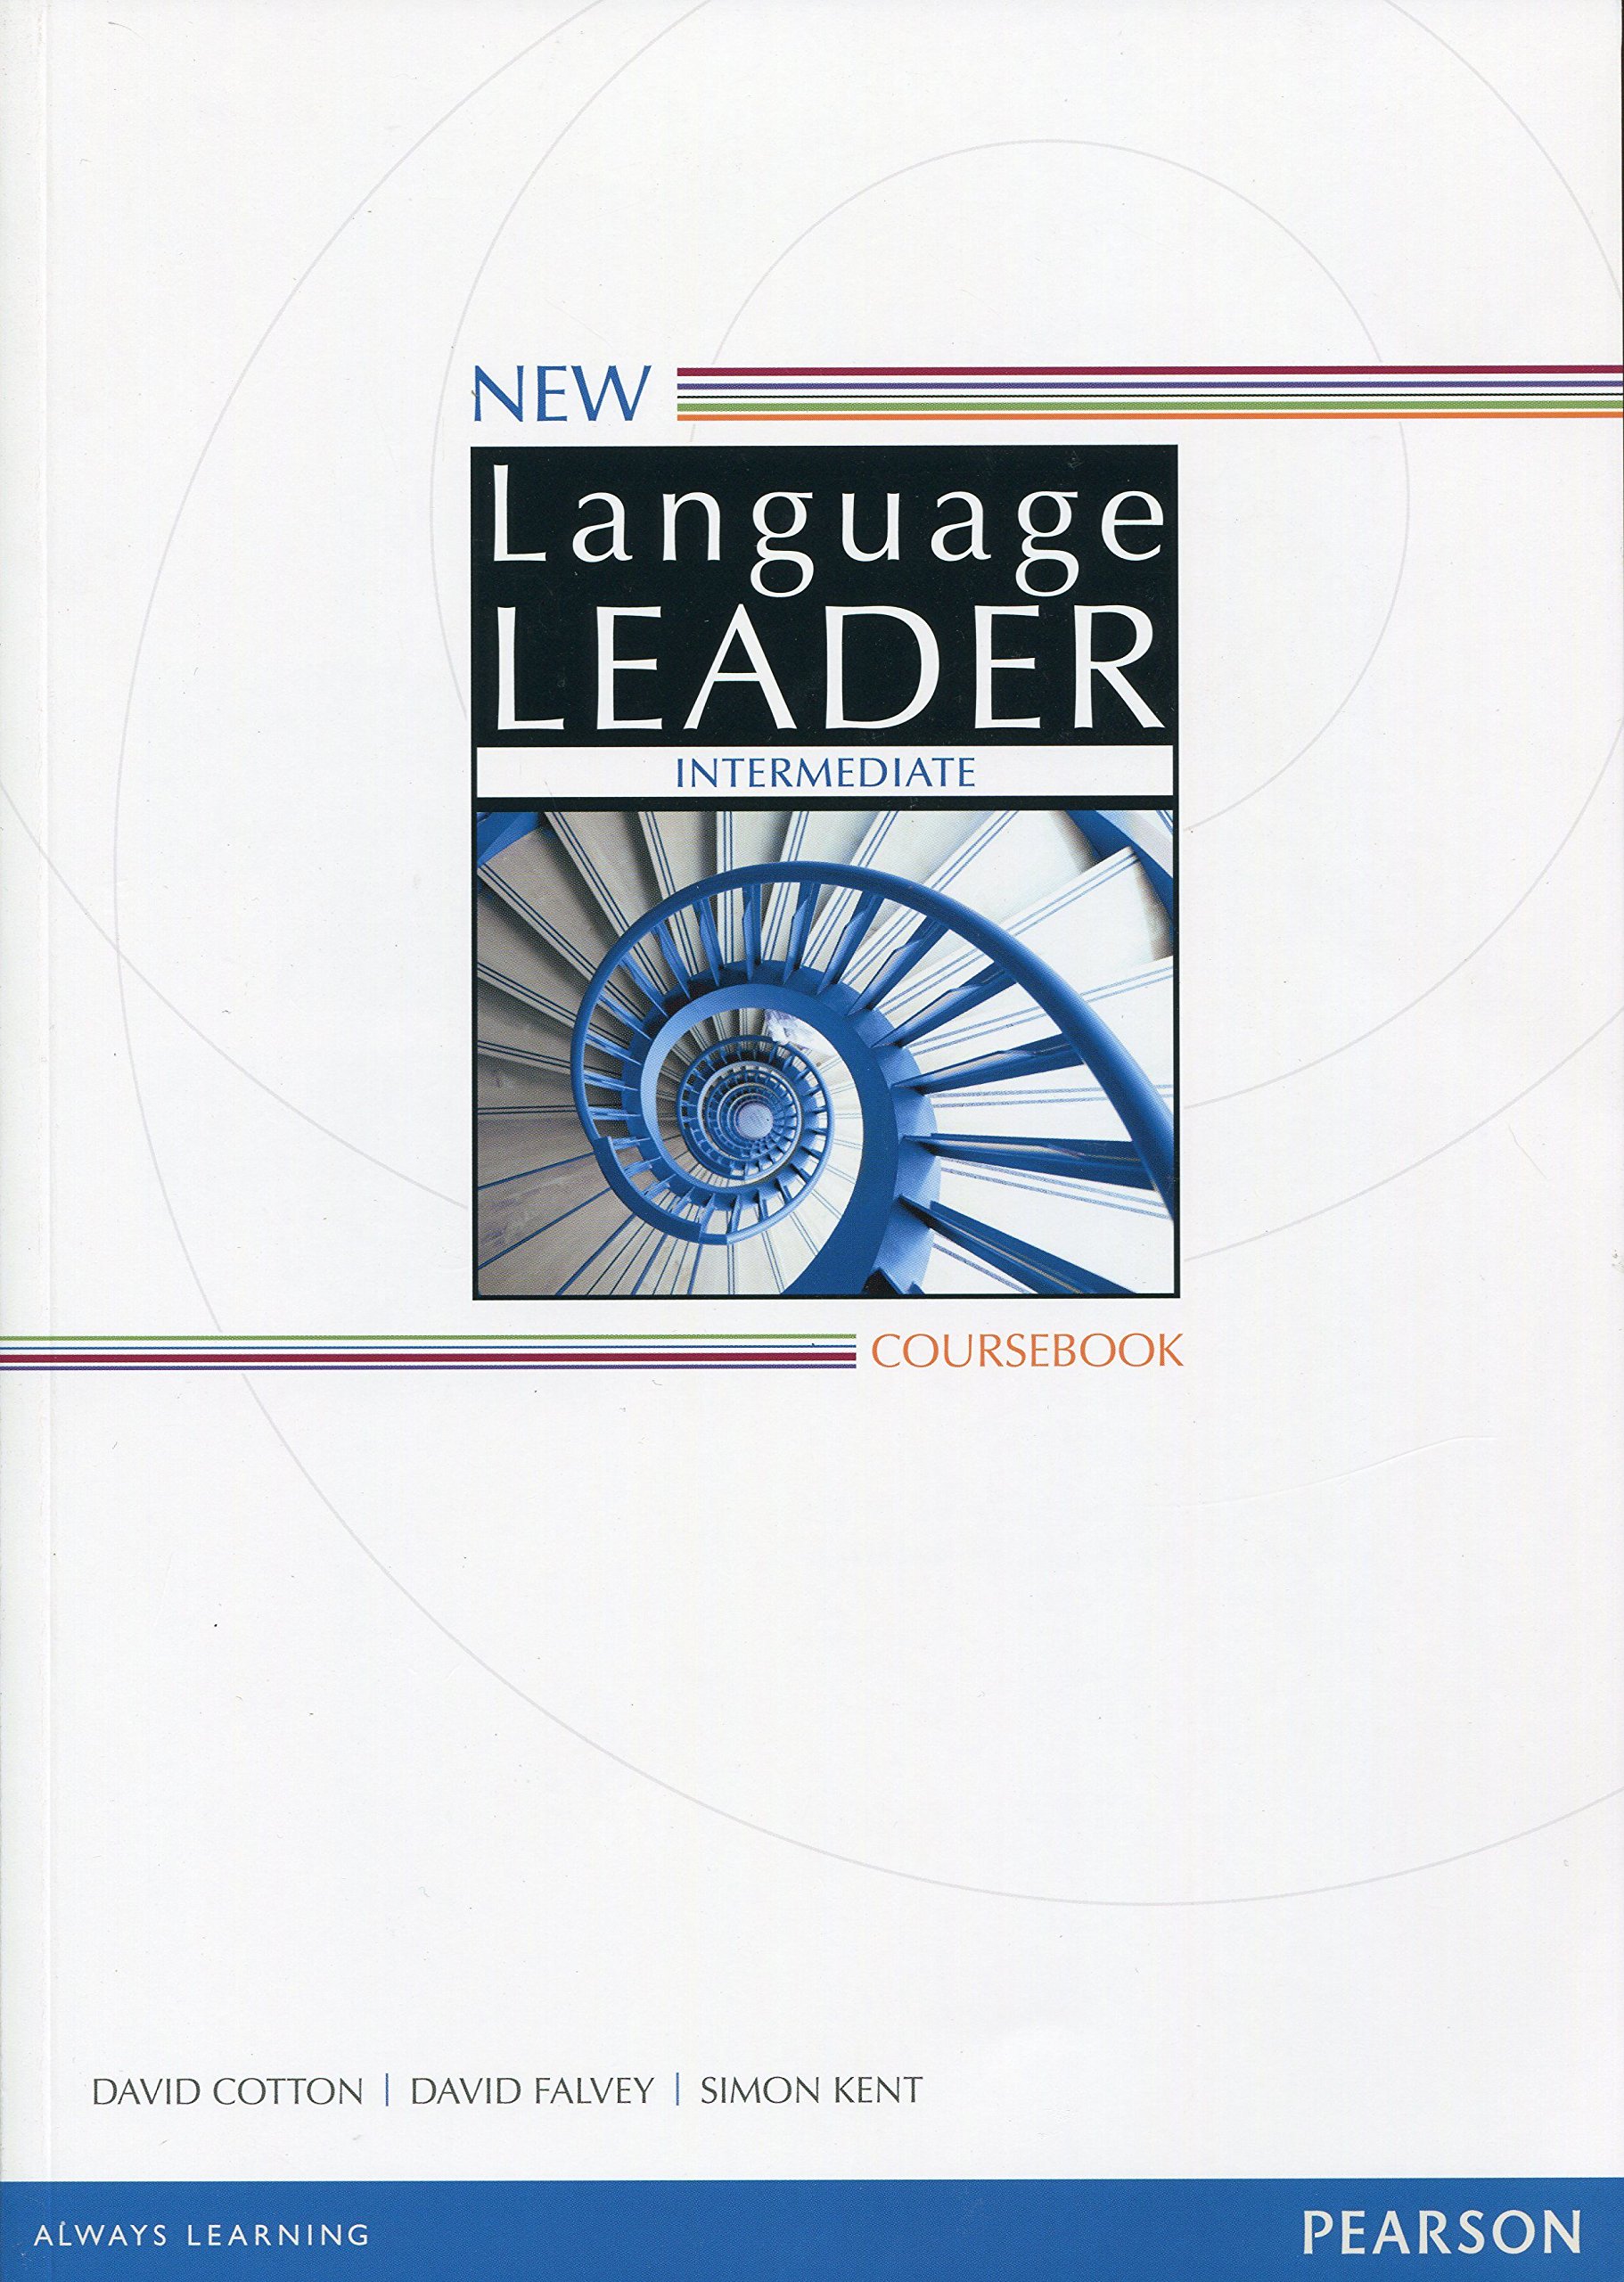 NEW LANGUAGE LEADER INTERMADIATE Student's  Book